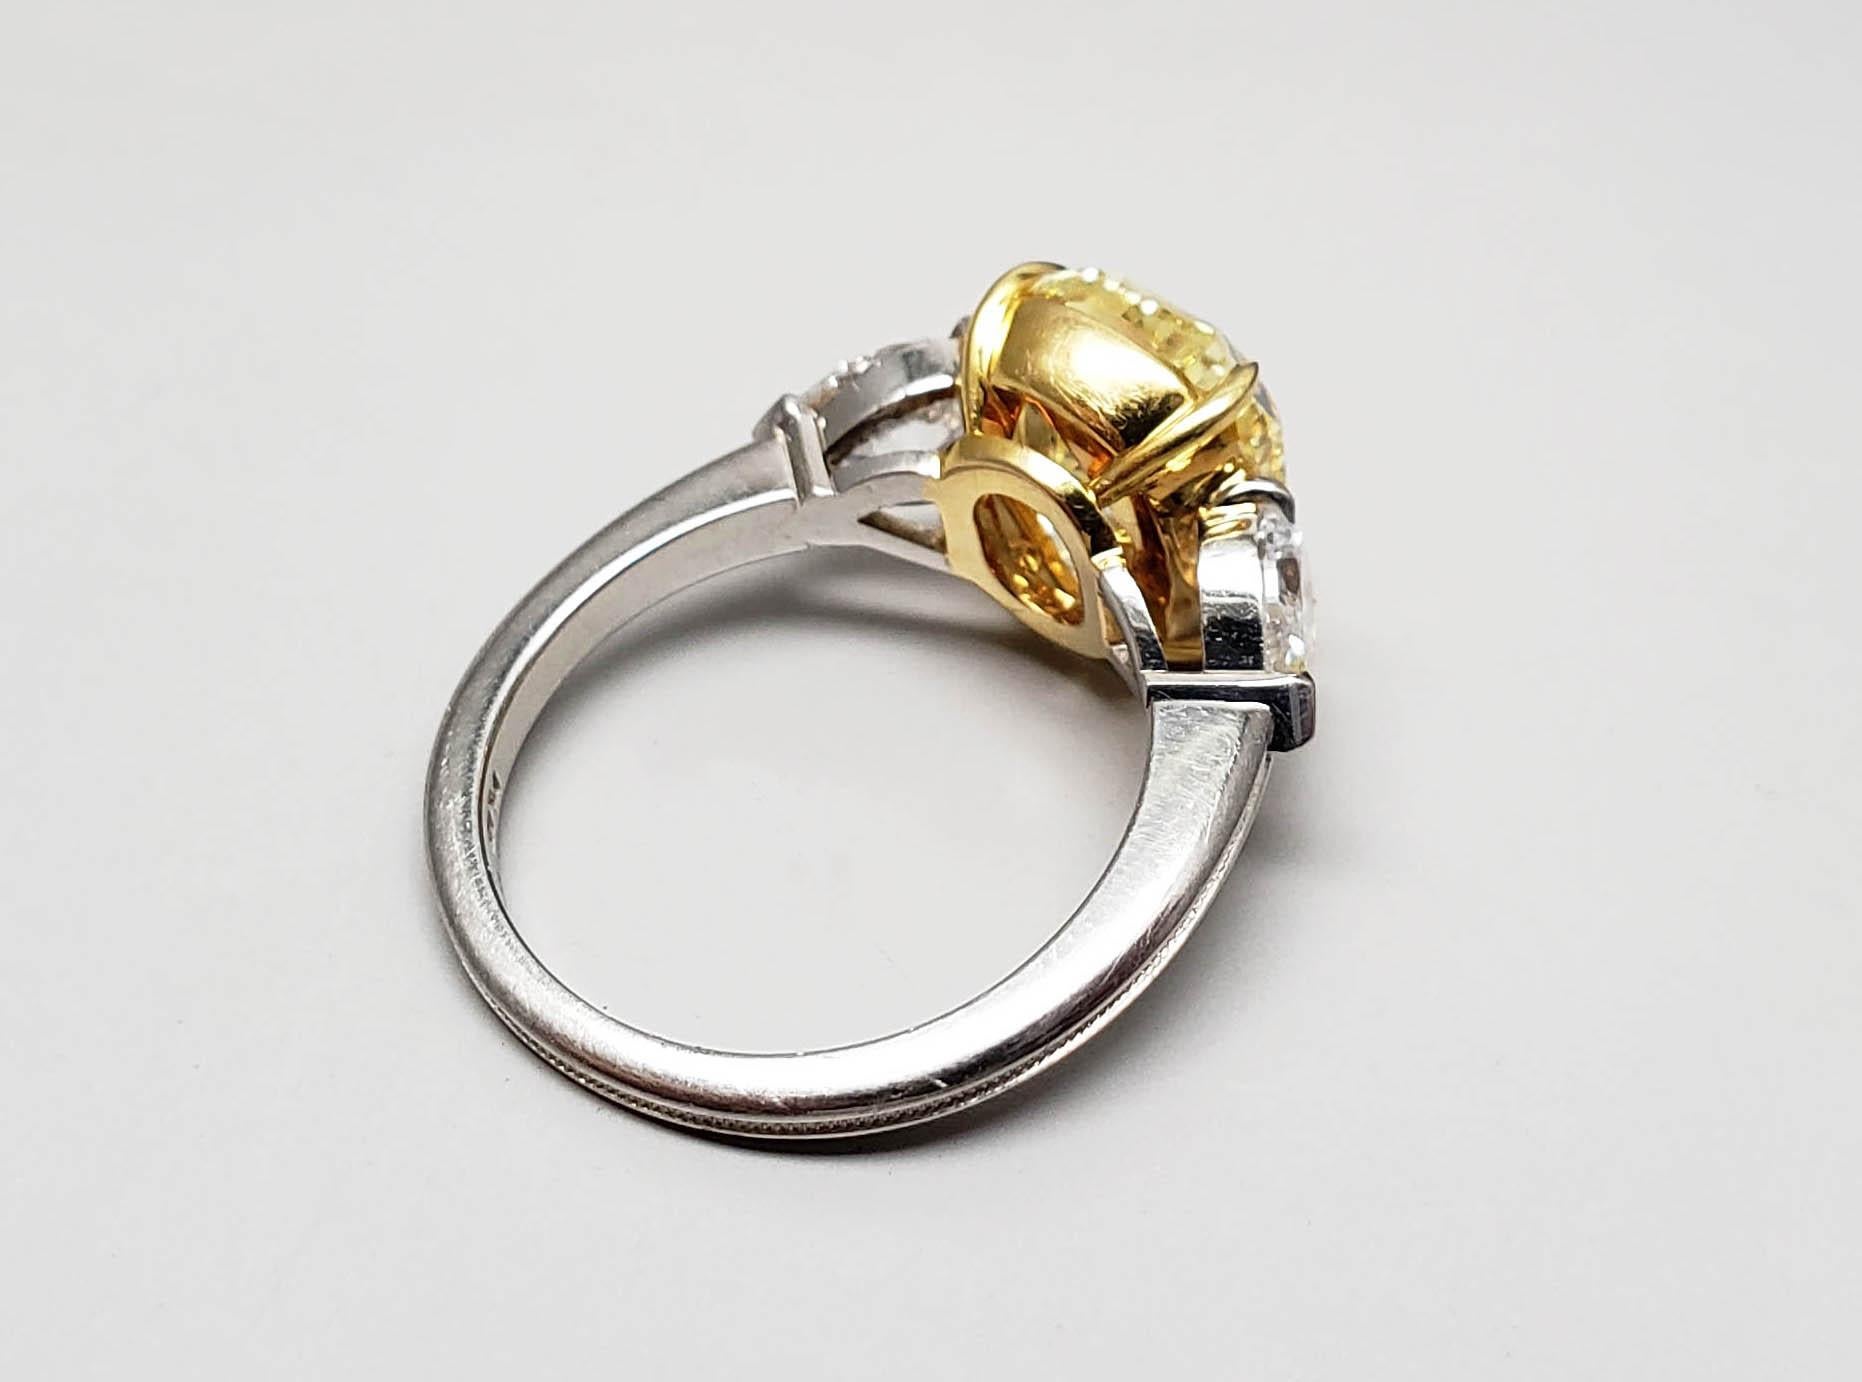 Scarselli 5.68 Carat Fancy Intense Yellow Cushion Cut Diamond Ring in Platinum 4